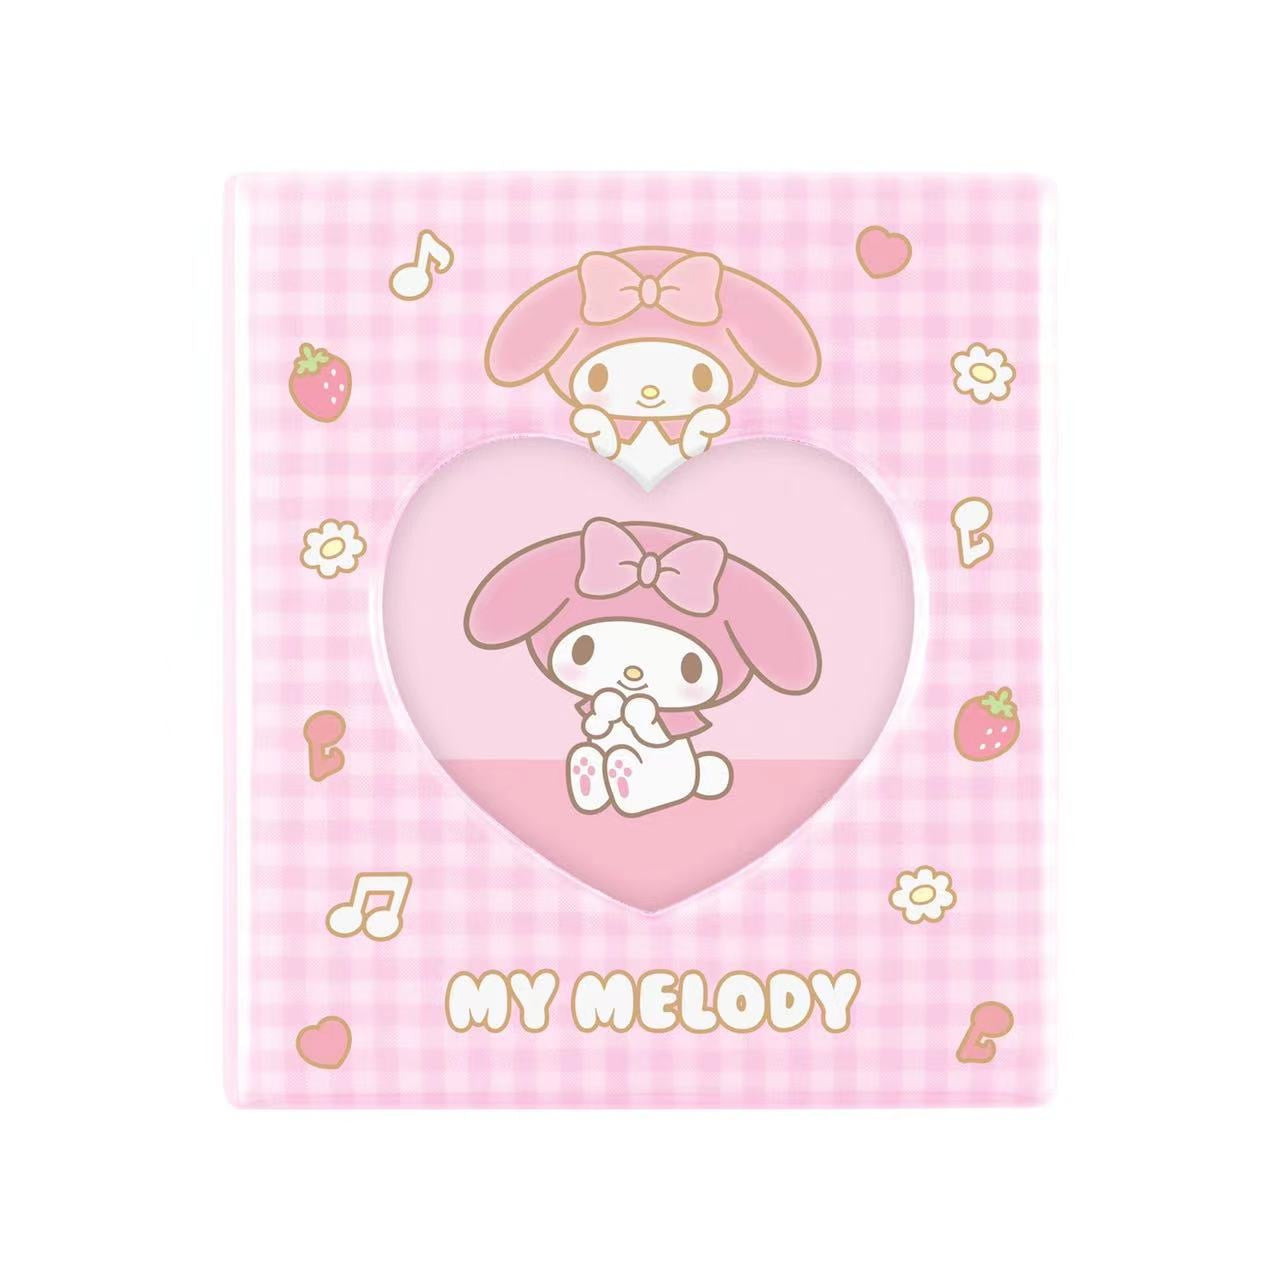 Sanrio My Melody Medium Size Photo Album